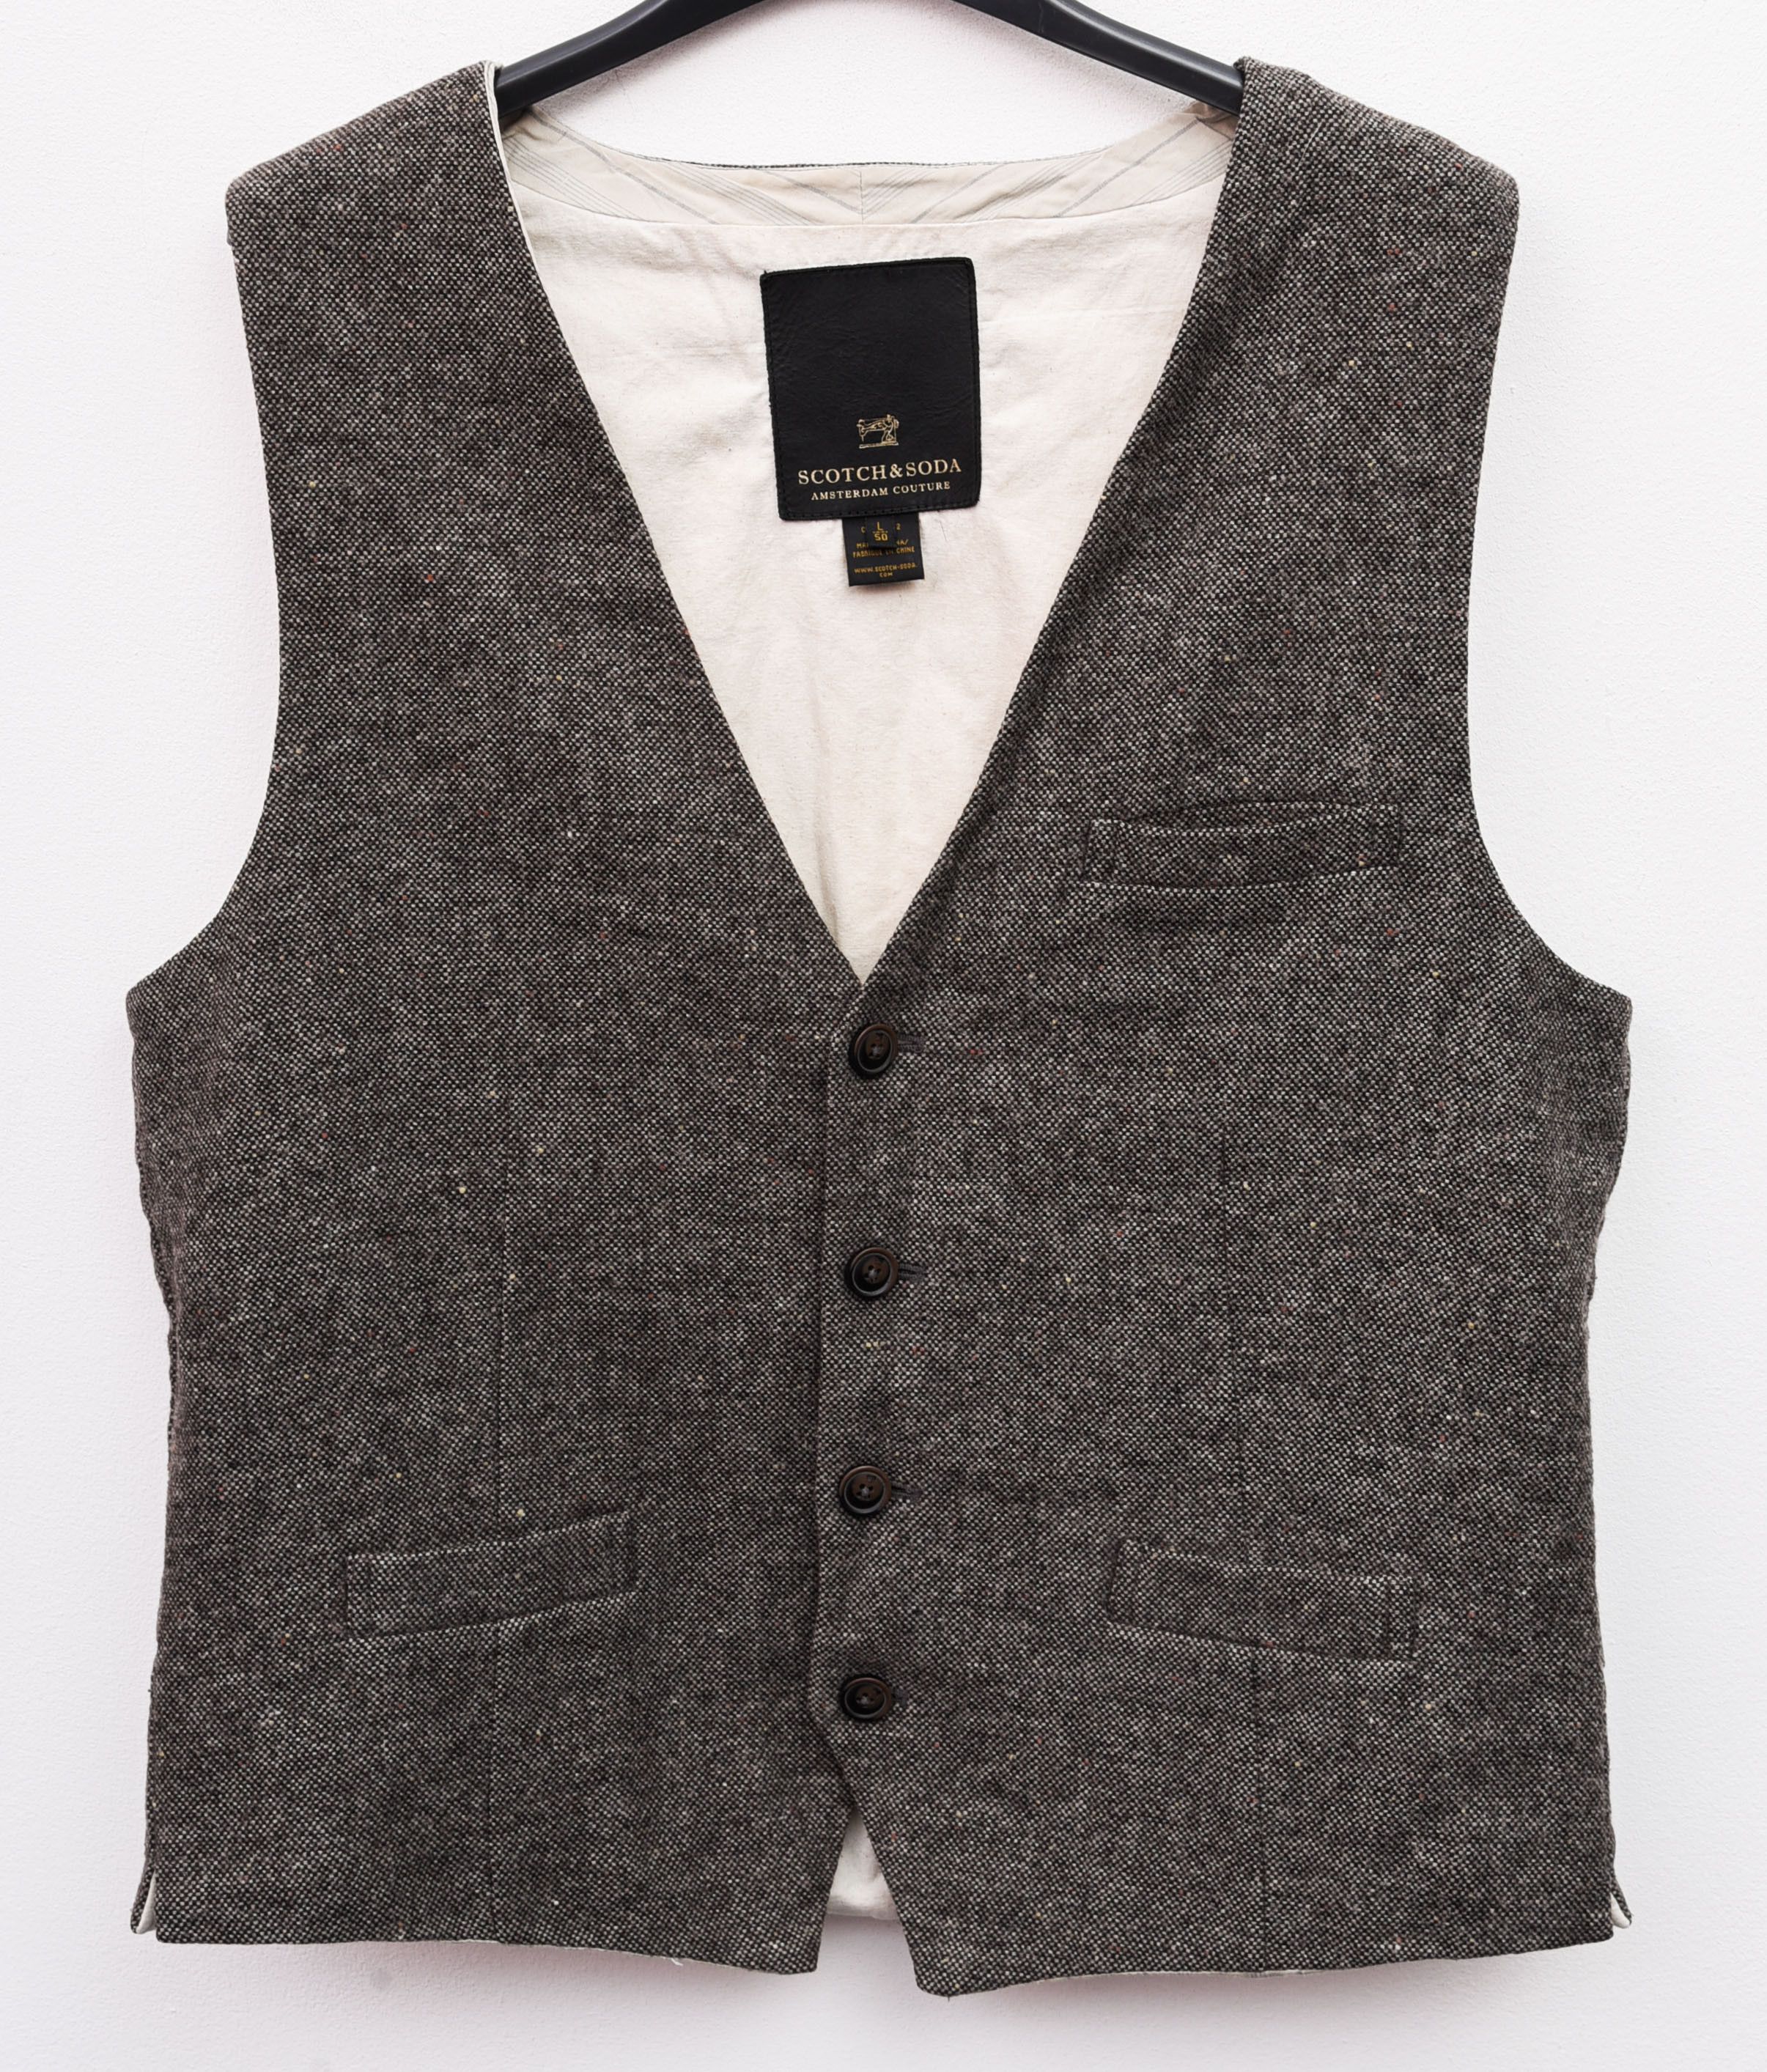 Scotch & Soda SCOTCH & SODA Amsterdam Couture Vest Wool Smart Gilet ...